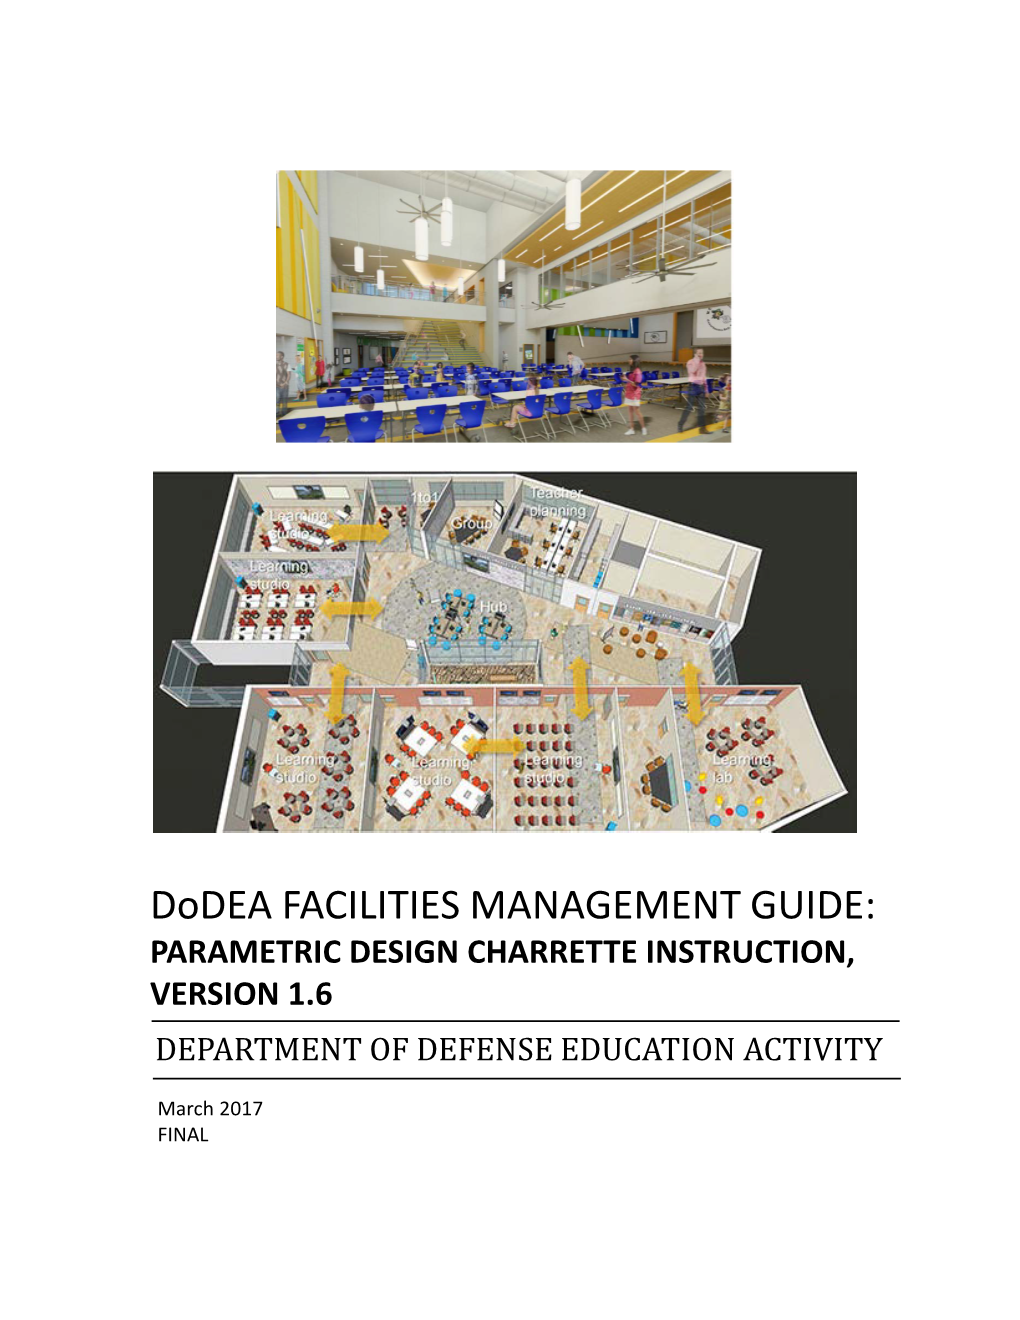 Dodea FACILITIES MANAGEMENT GUIDE: PARAMETRIC DESIGN CHARRETTE INSTRUCTION, VERSION 1.6 DEPARTMENT of DEFENSE EDUCATION ACTIVITY